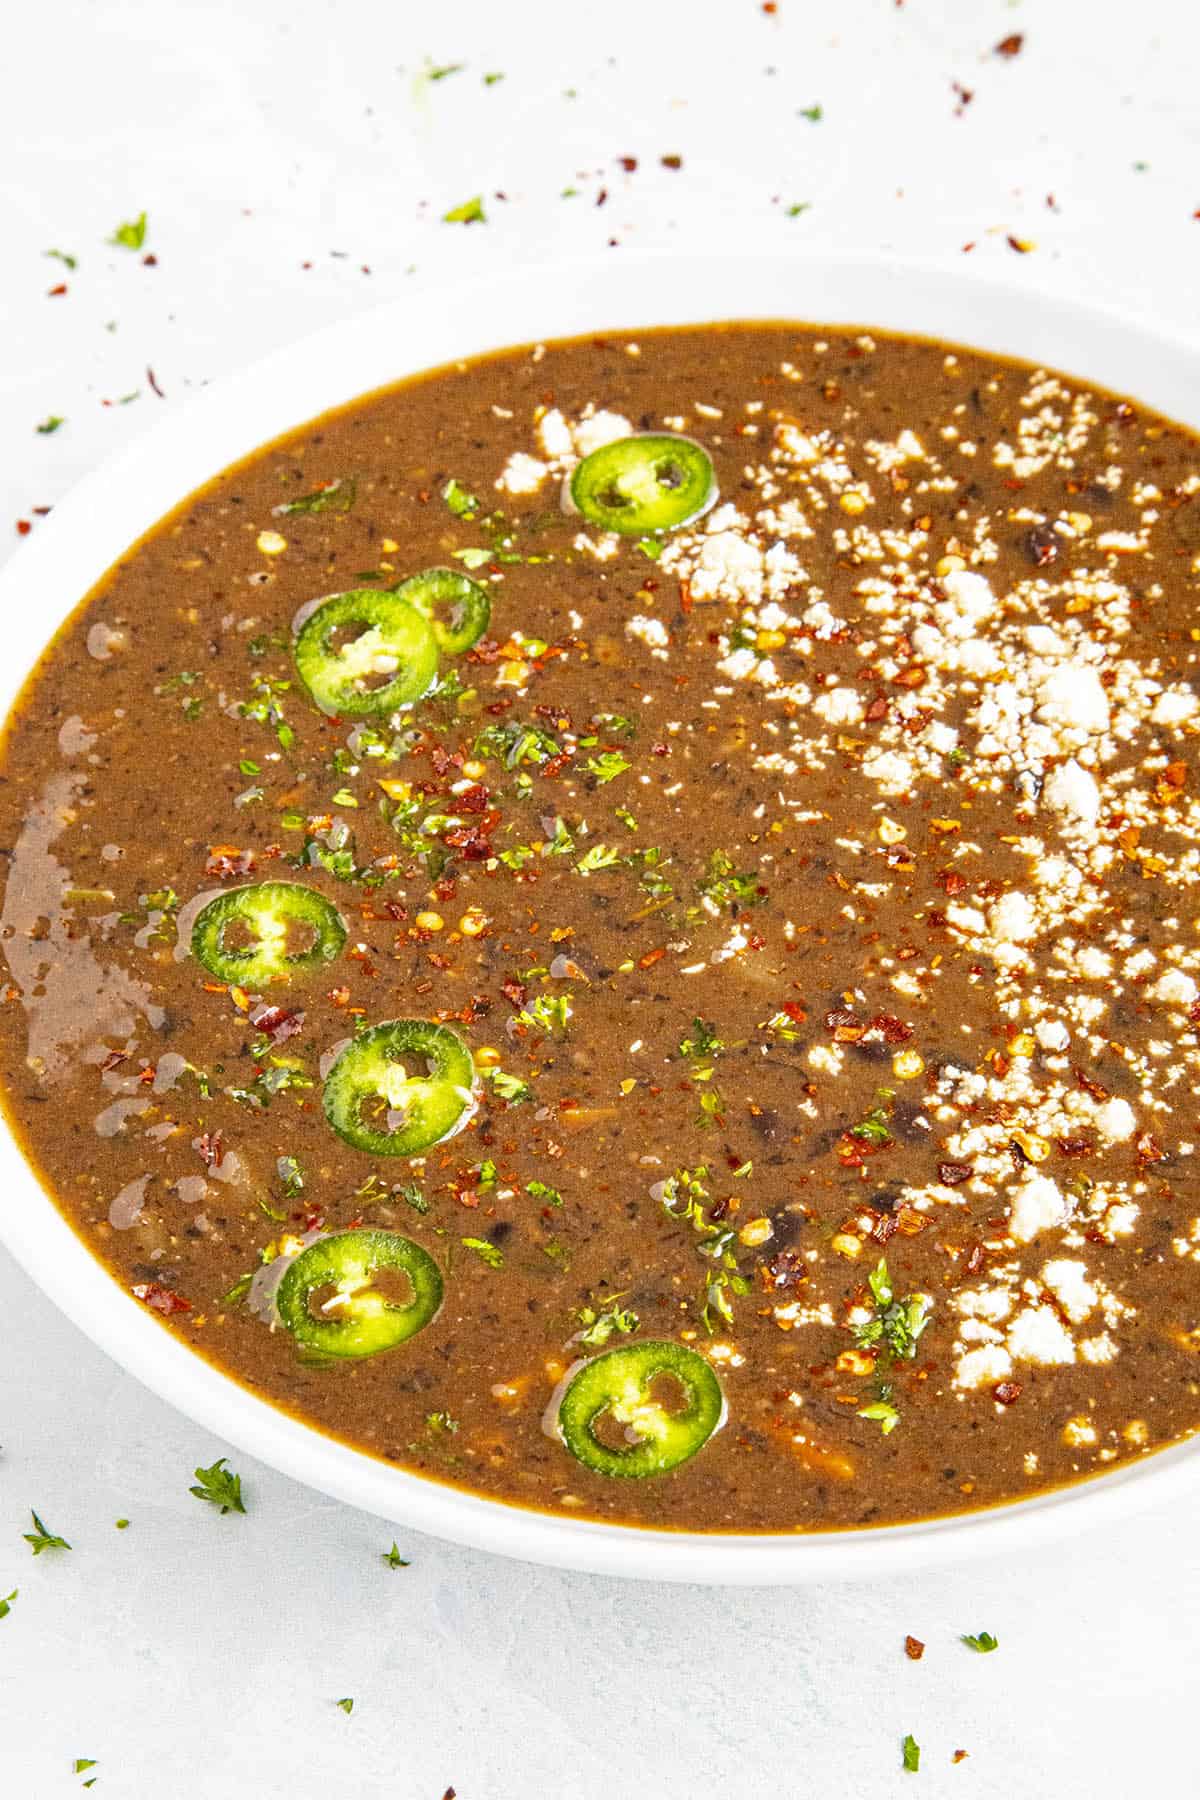 Spicy Black Bean Soup, ready to enjoy